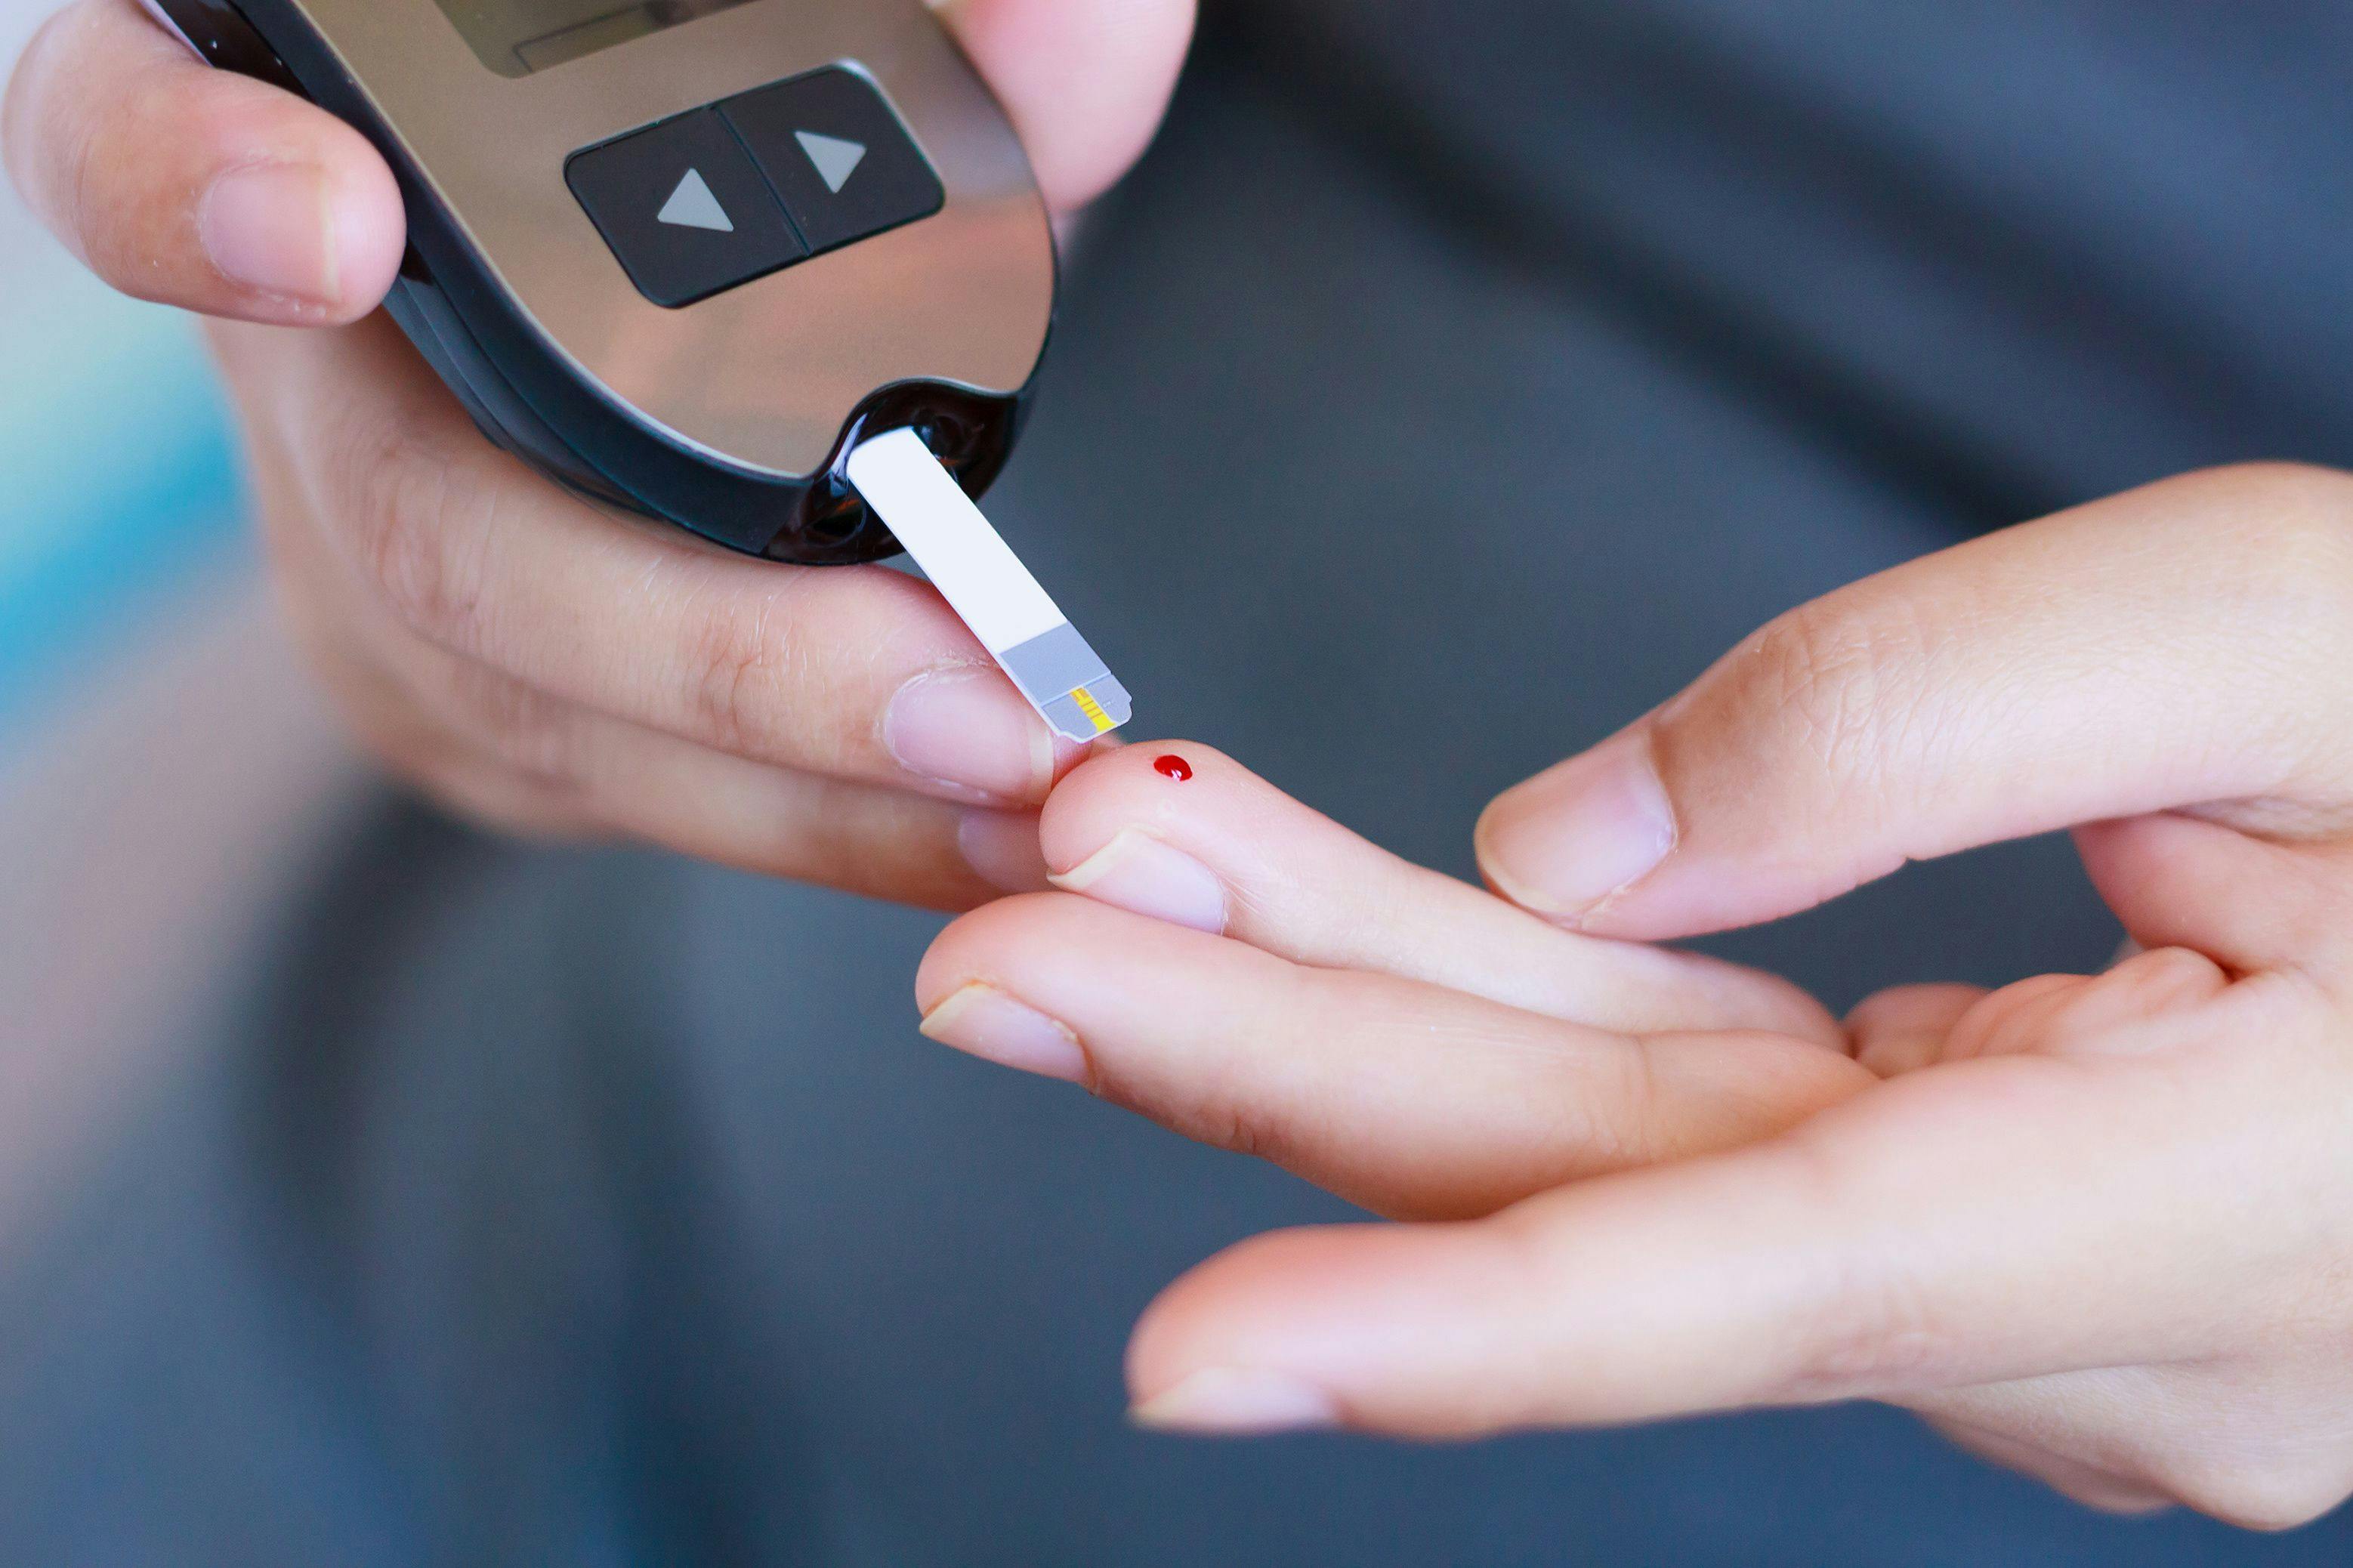 Sandoz Reviews Insulin Access, Cost, and Biosimilar Potential